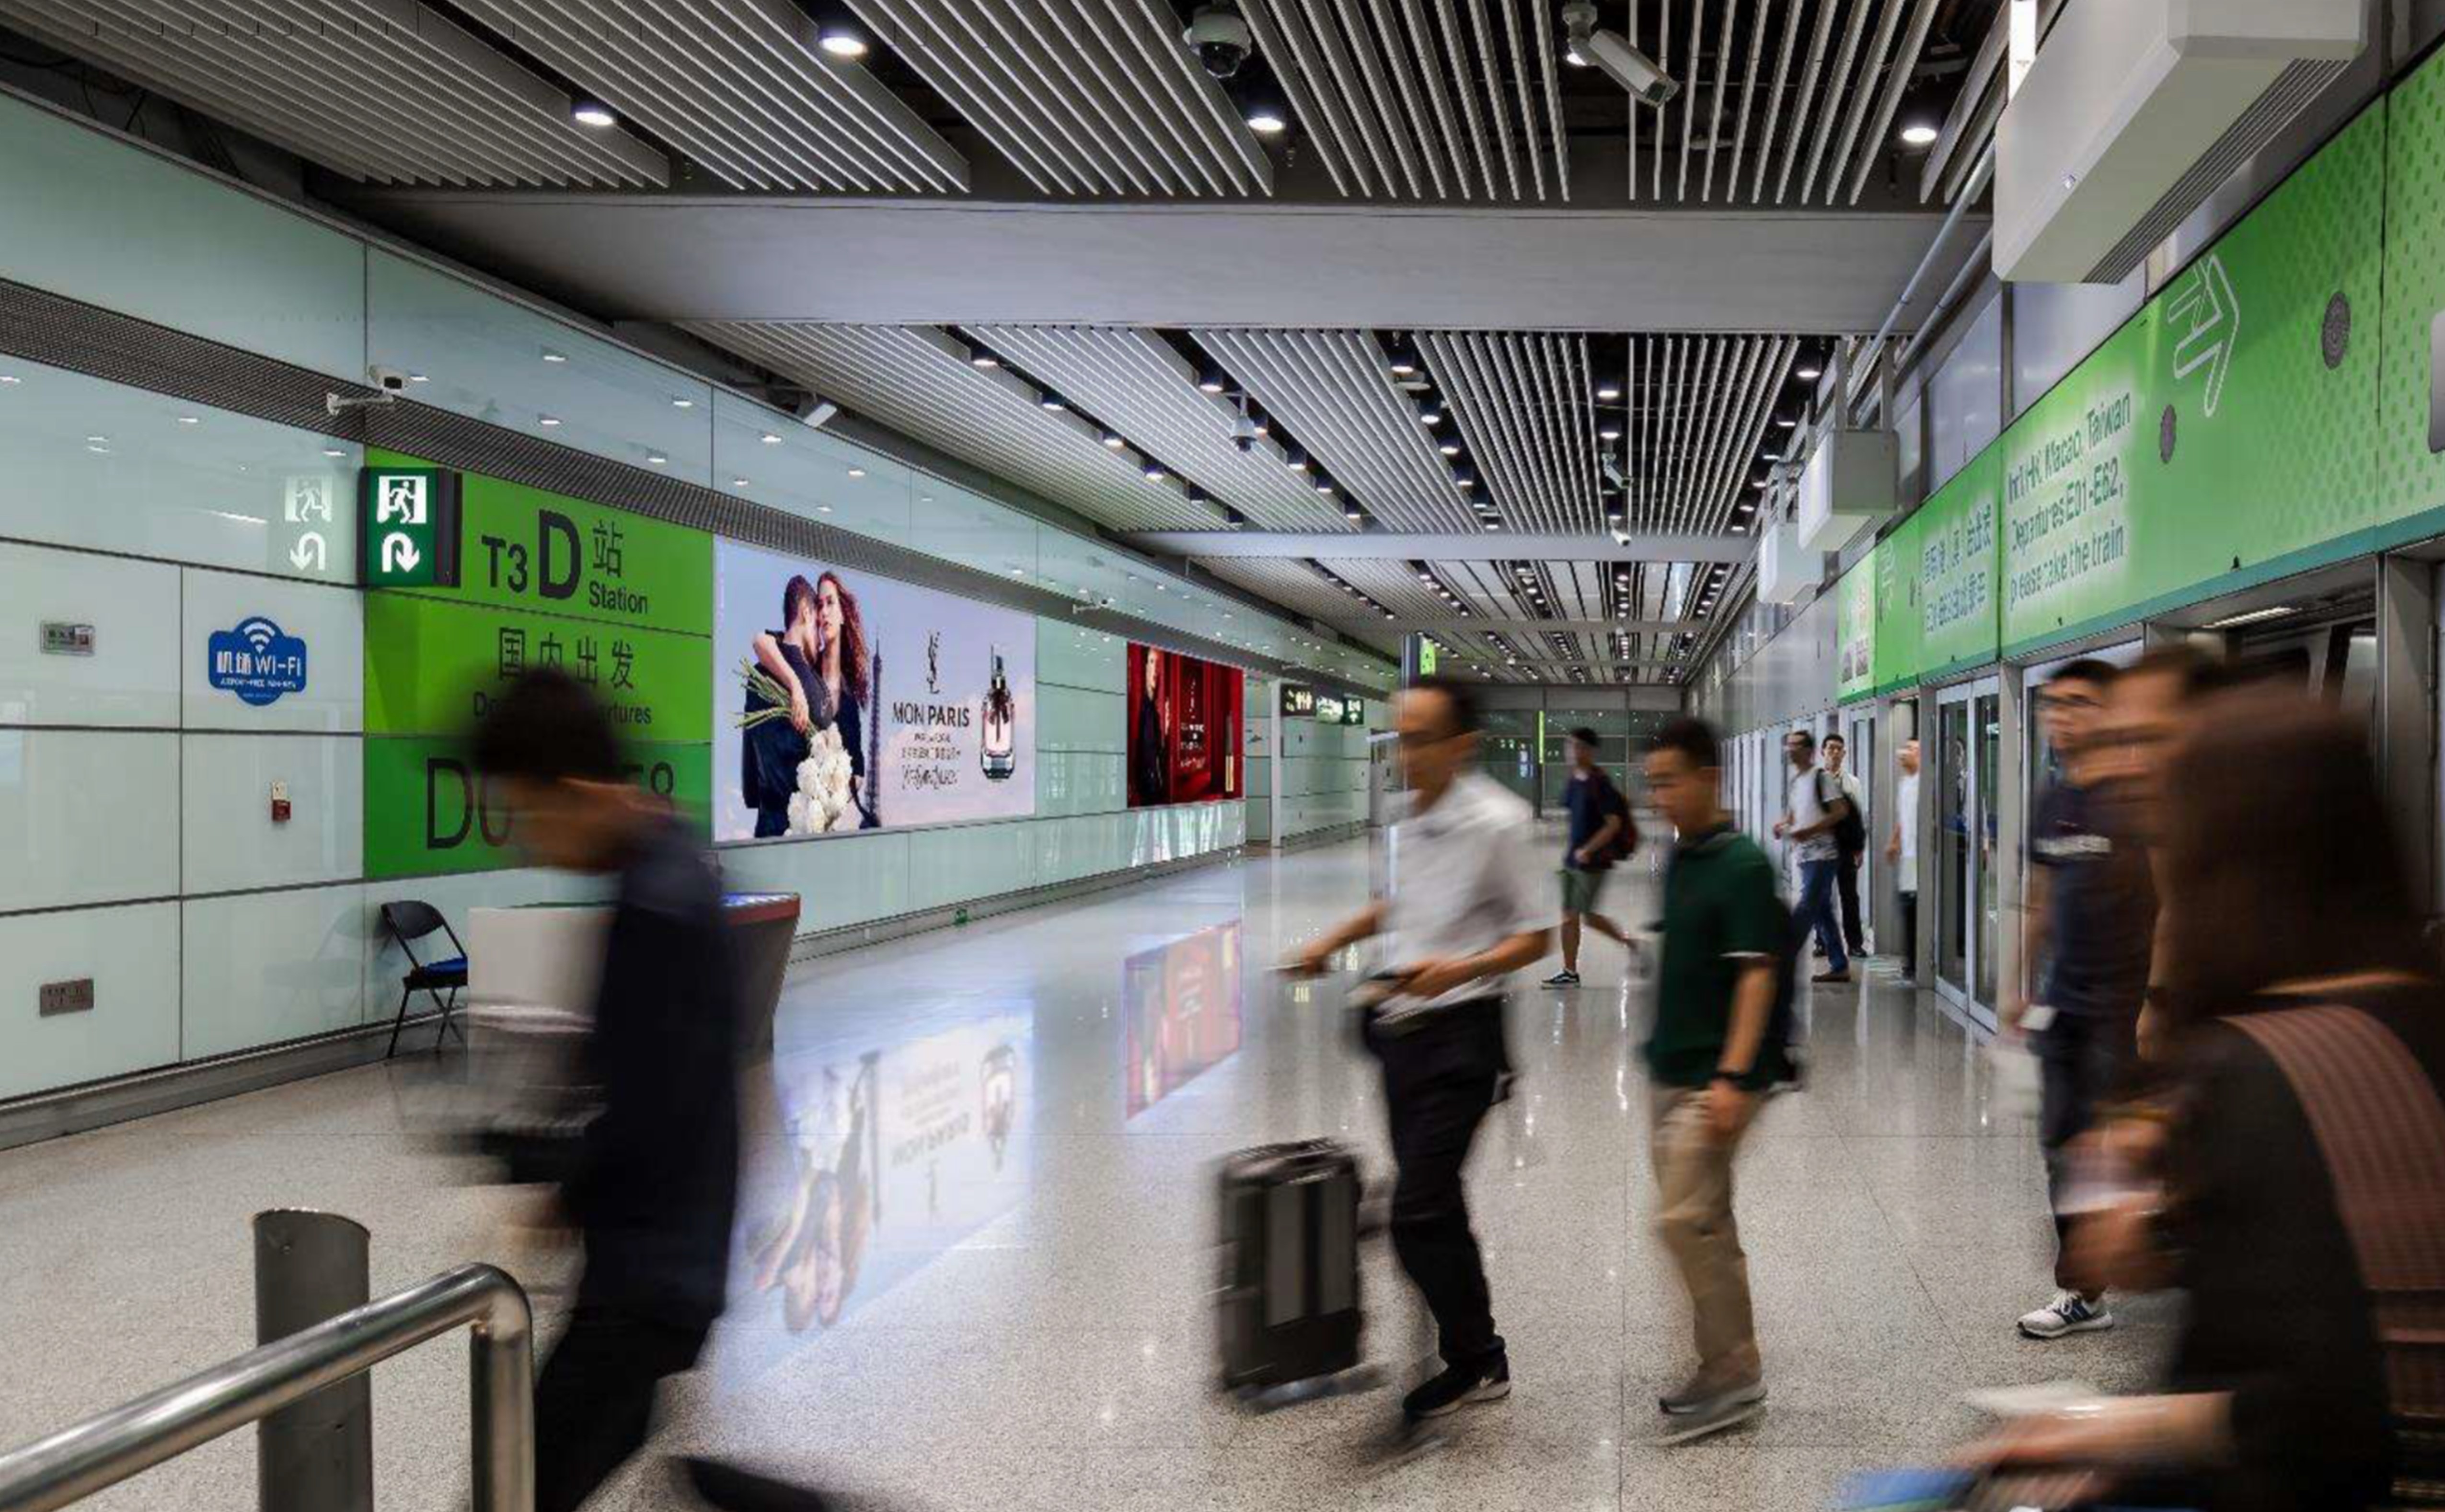 Capital Airport MRT Light Box Advertising